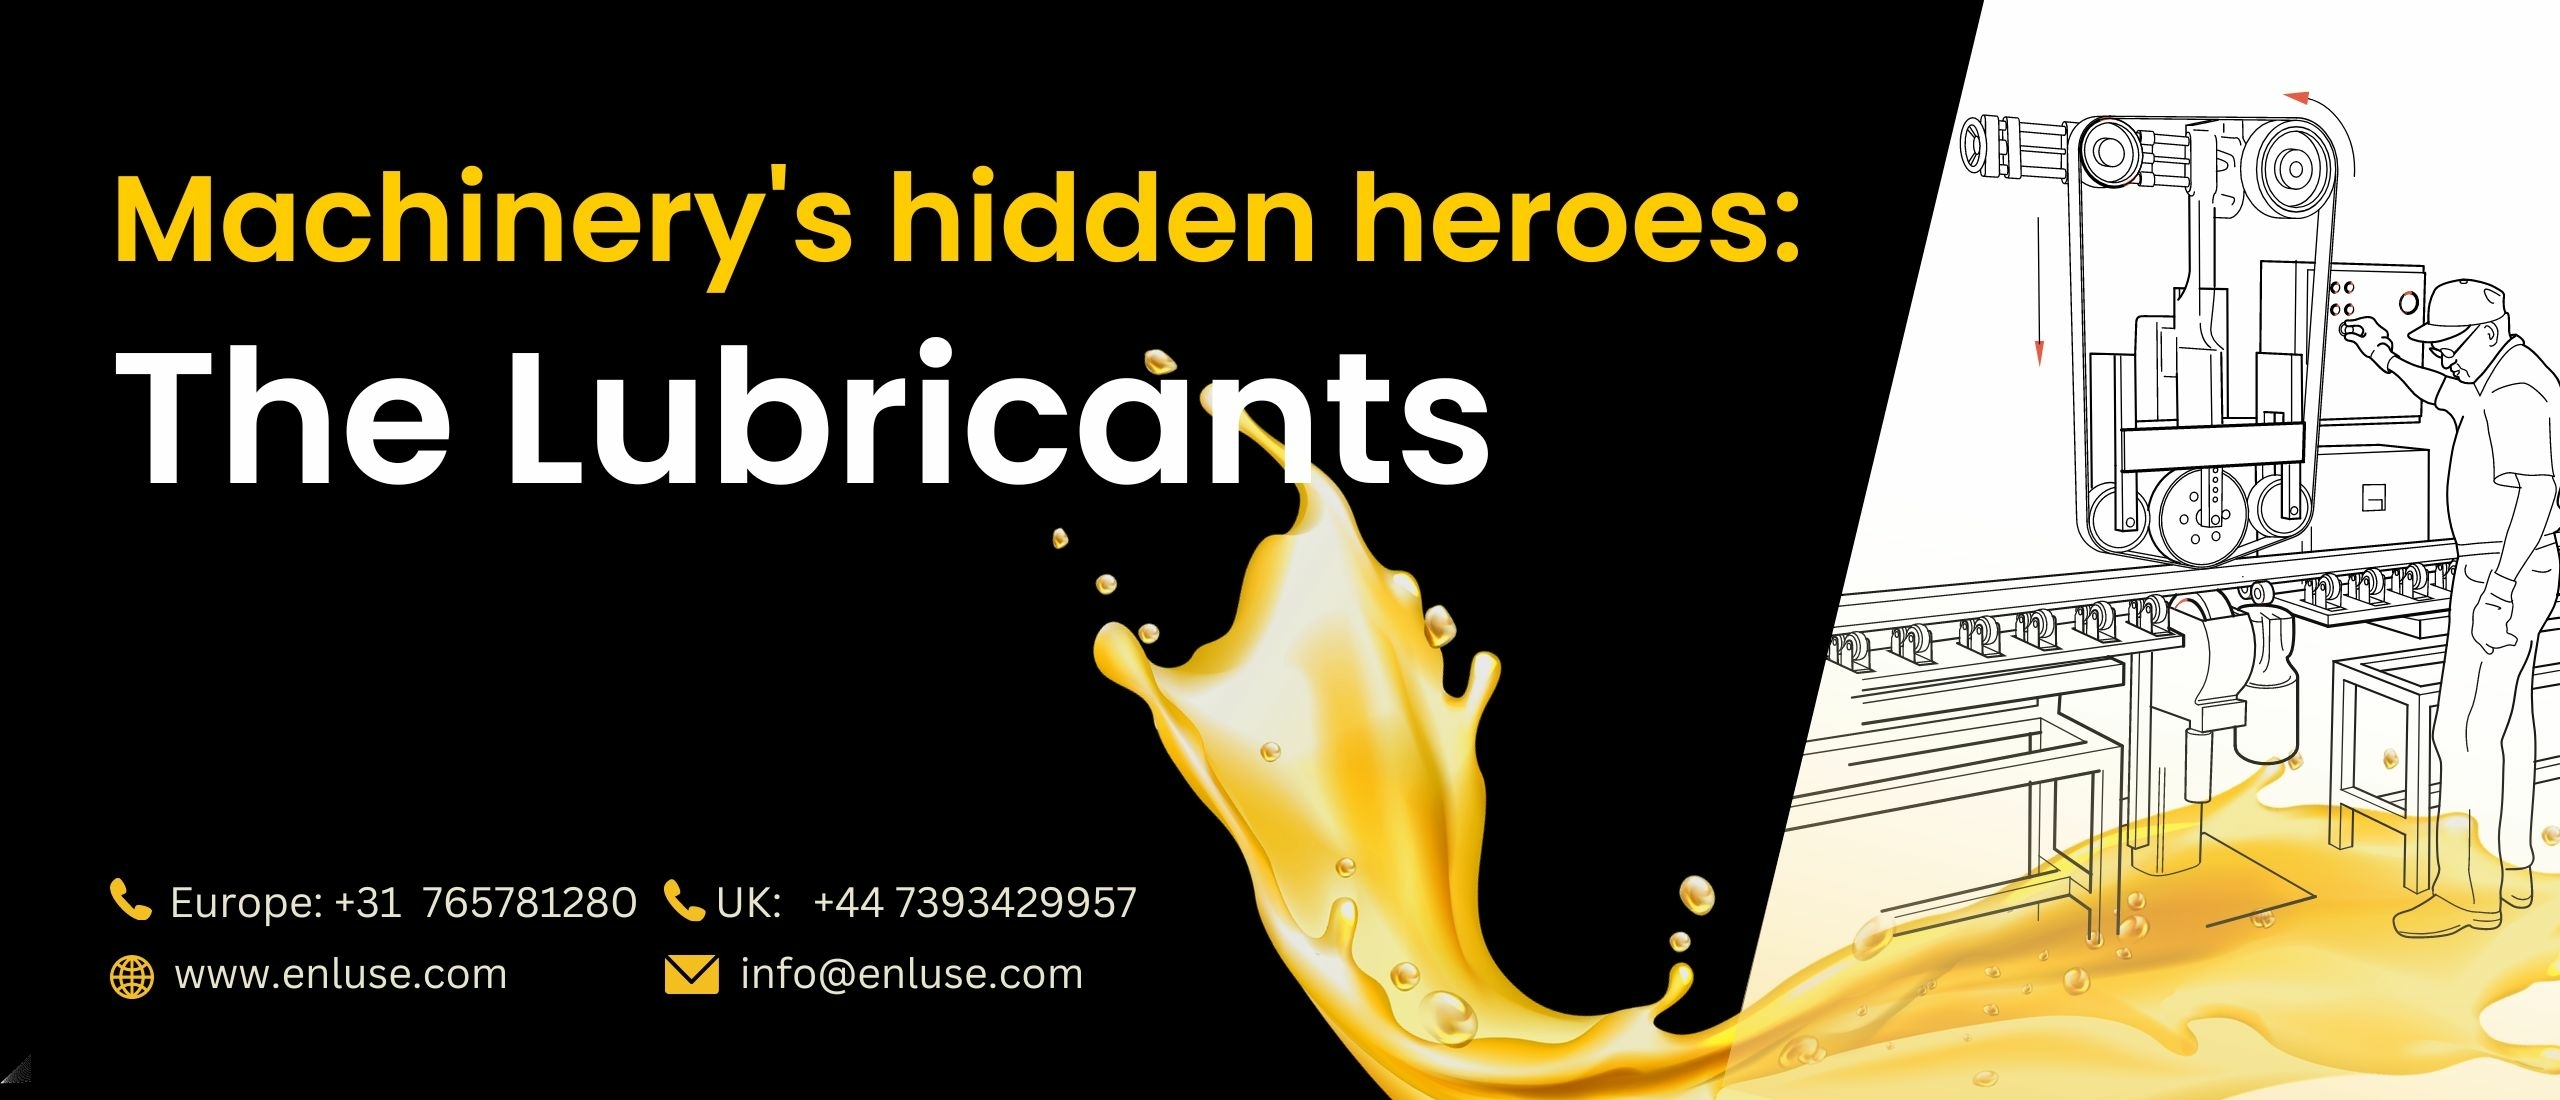 Machinery's hidden heroes: the lubricants